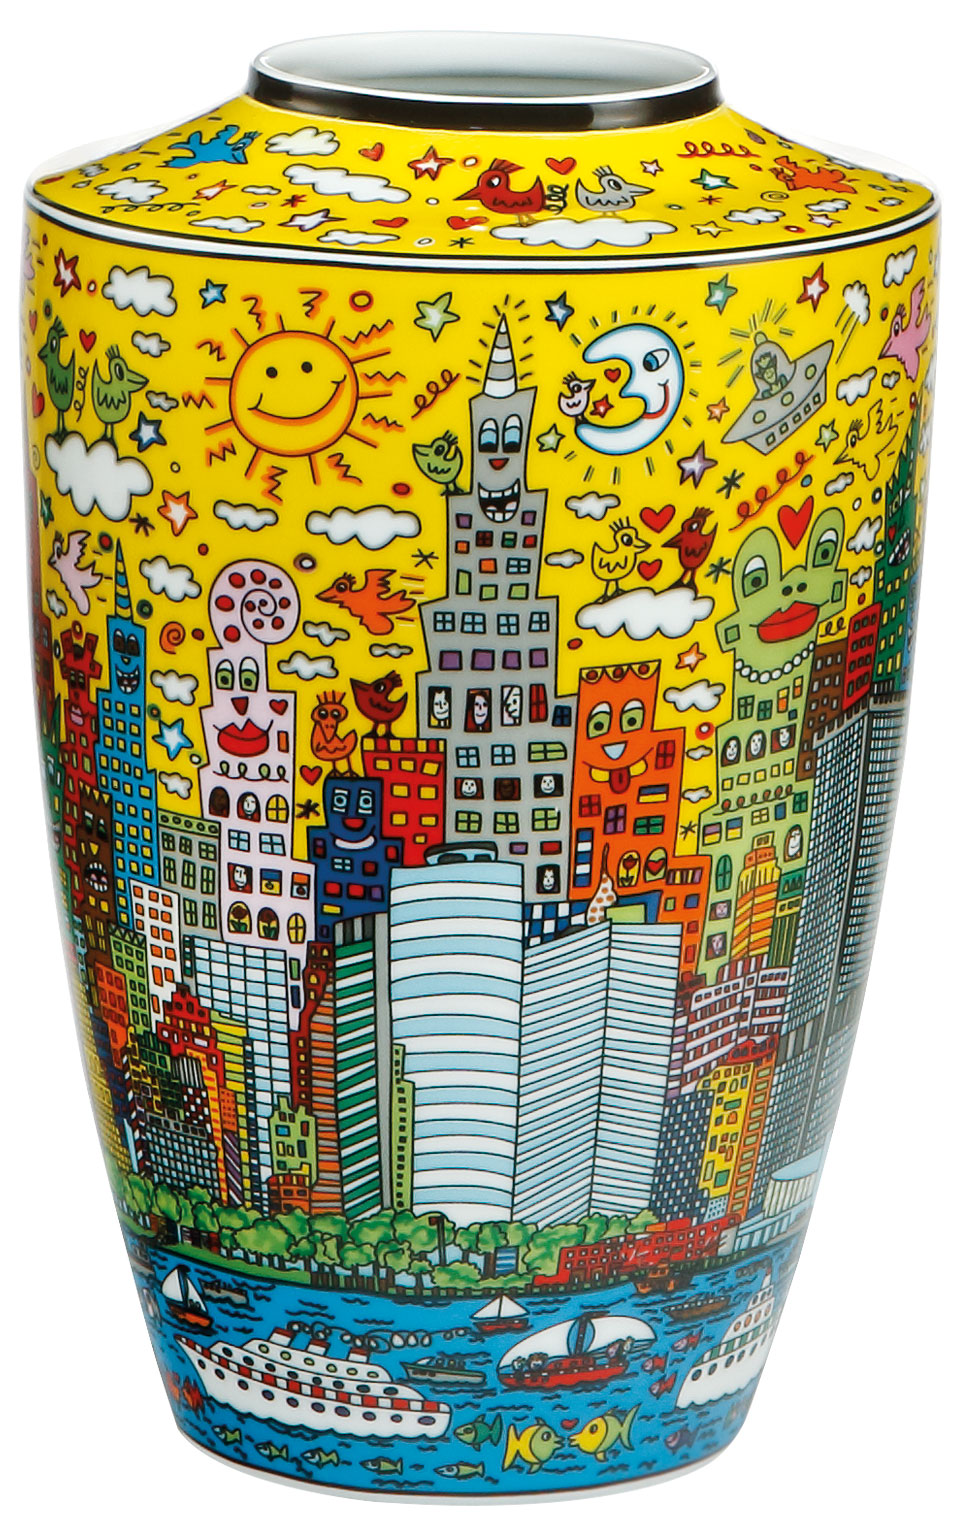 Porcelain vase "My New York City Sunset" by James Rizzi